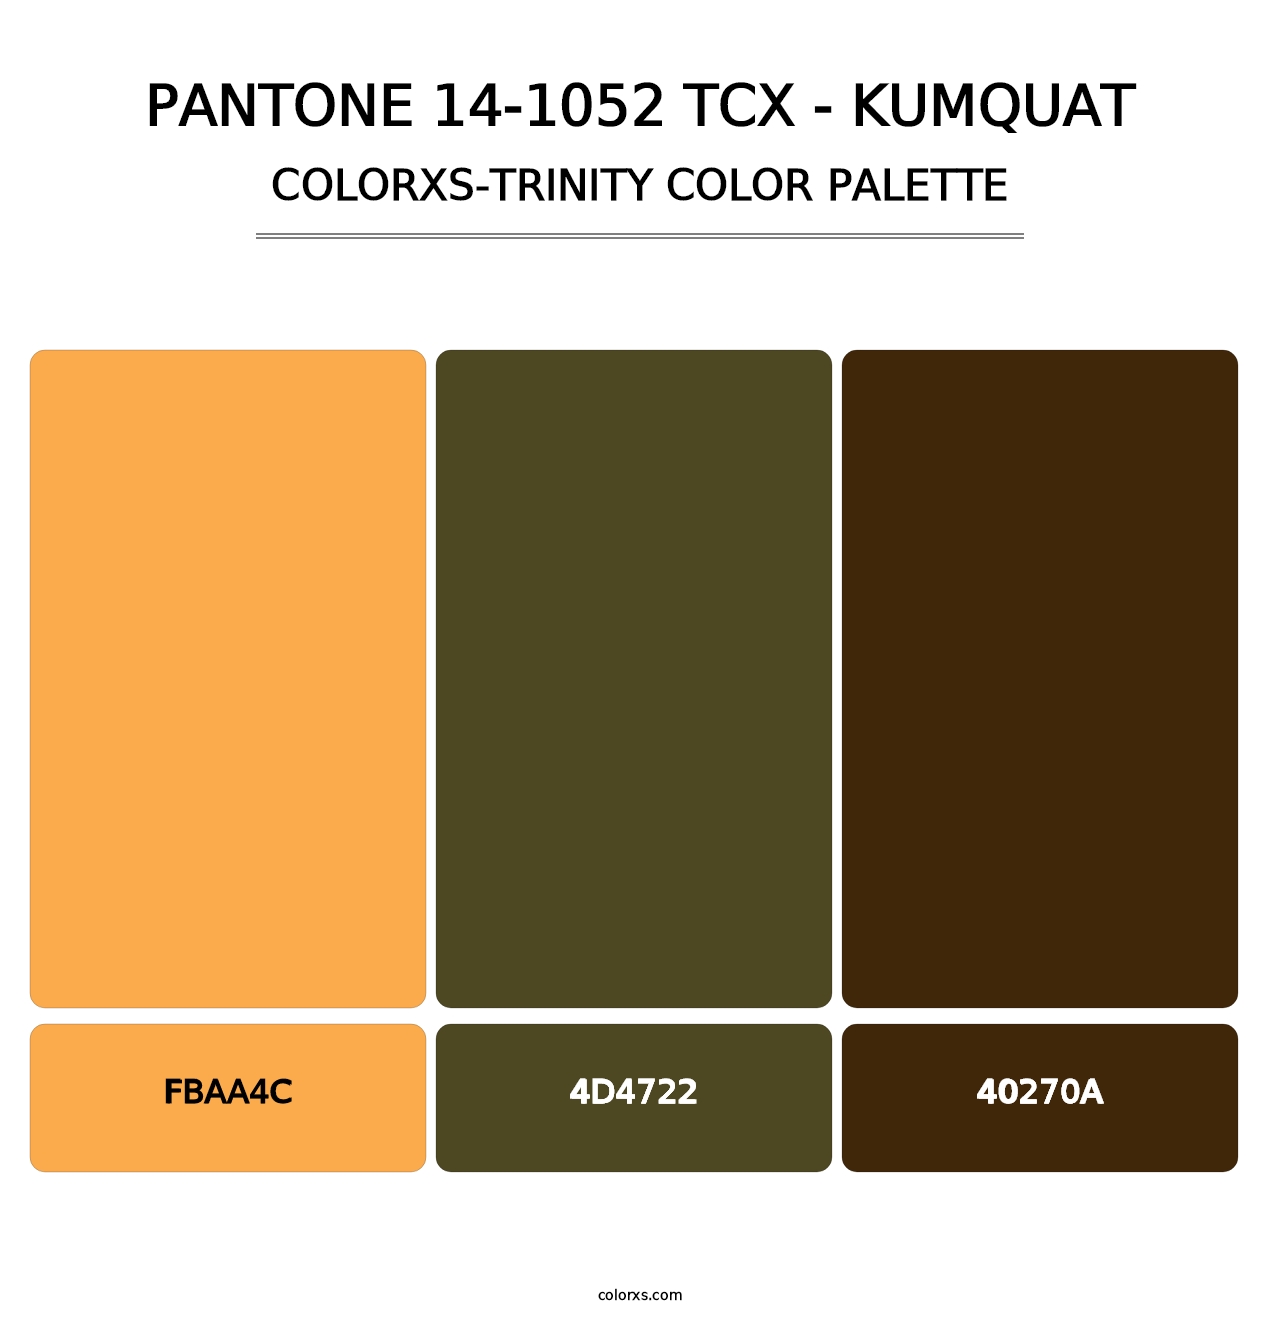 PANTONE 14-1052 TCX - Kumquat - Colorxs Trinity Palette